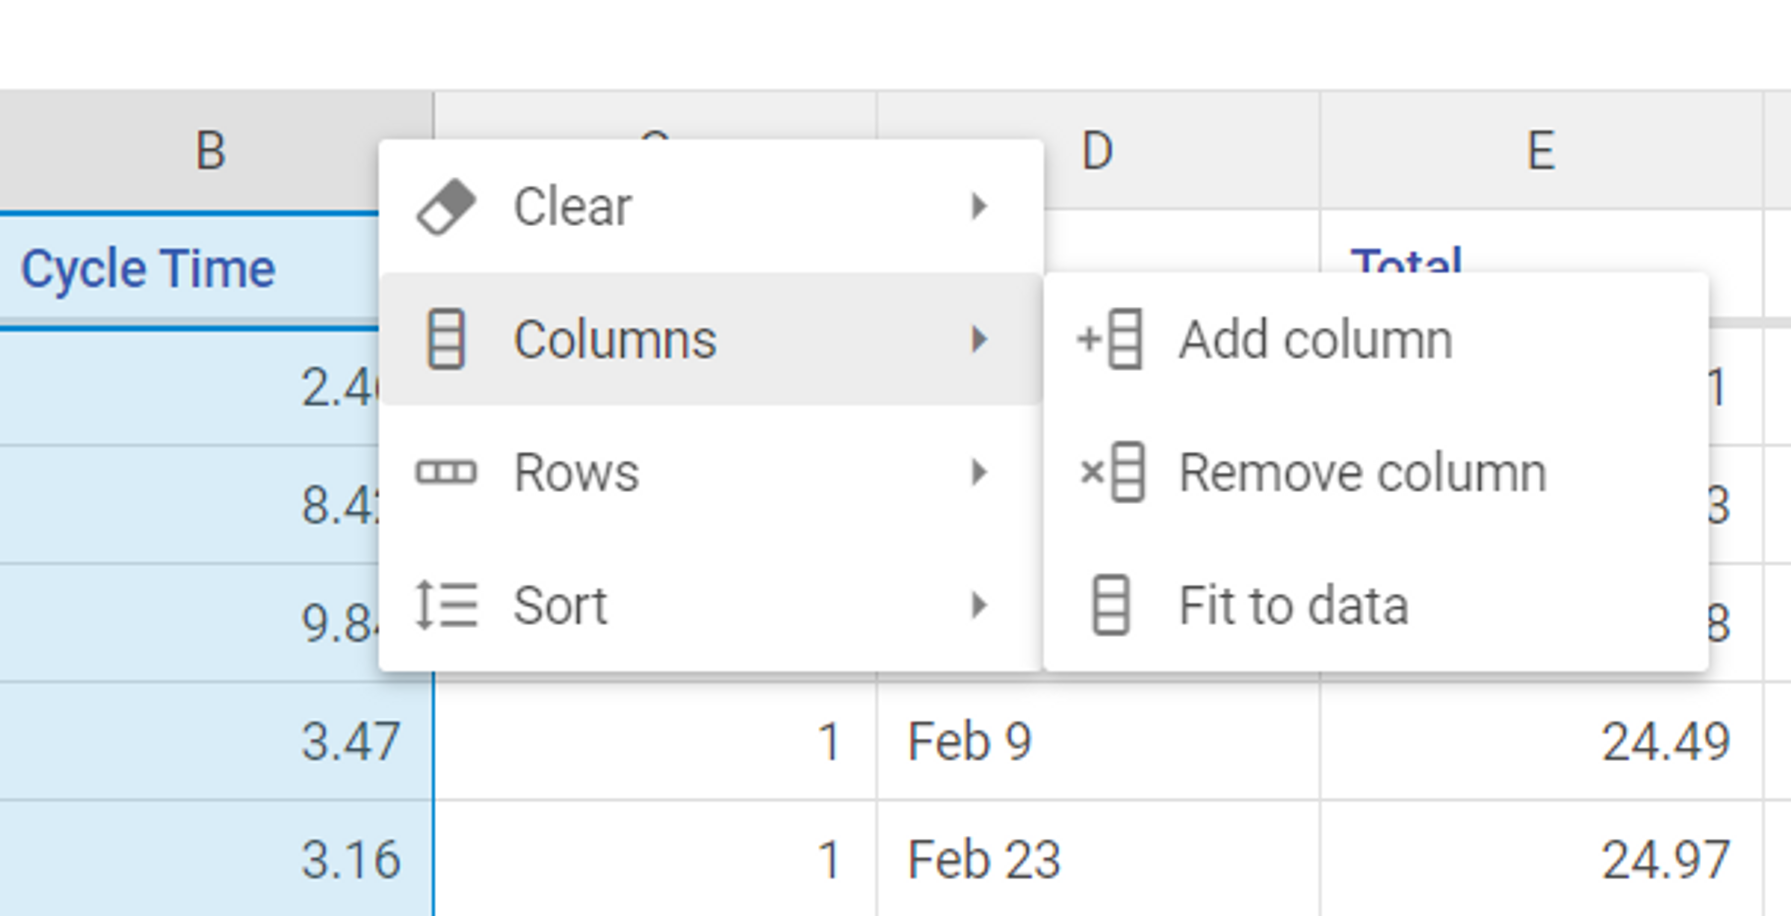 Menu showing Column submenu with Add column and Delete column